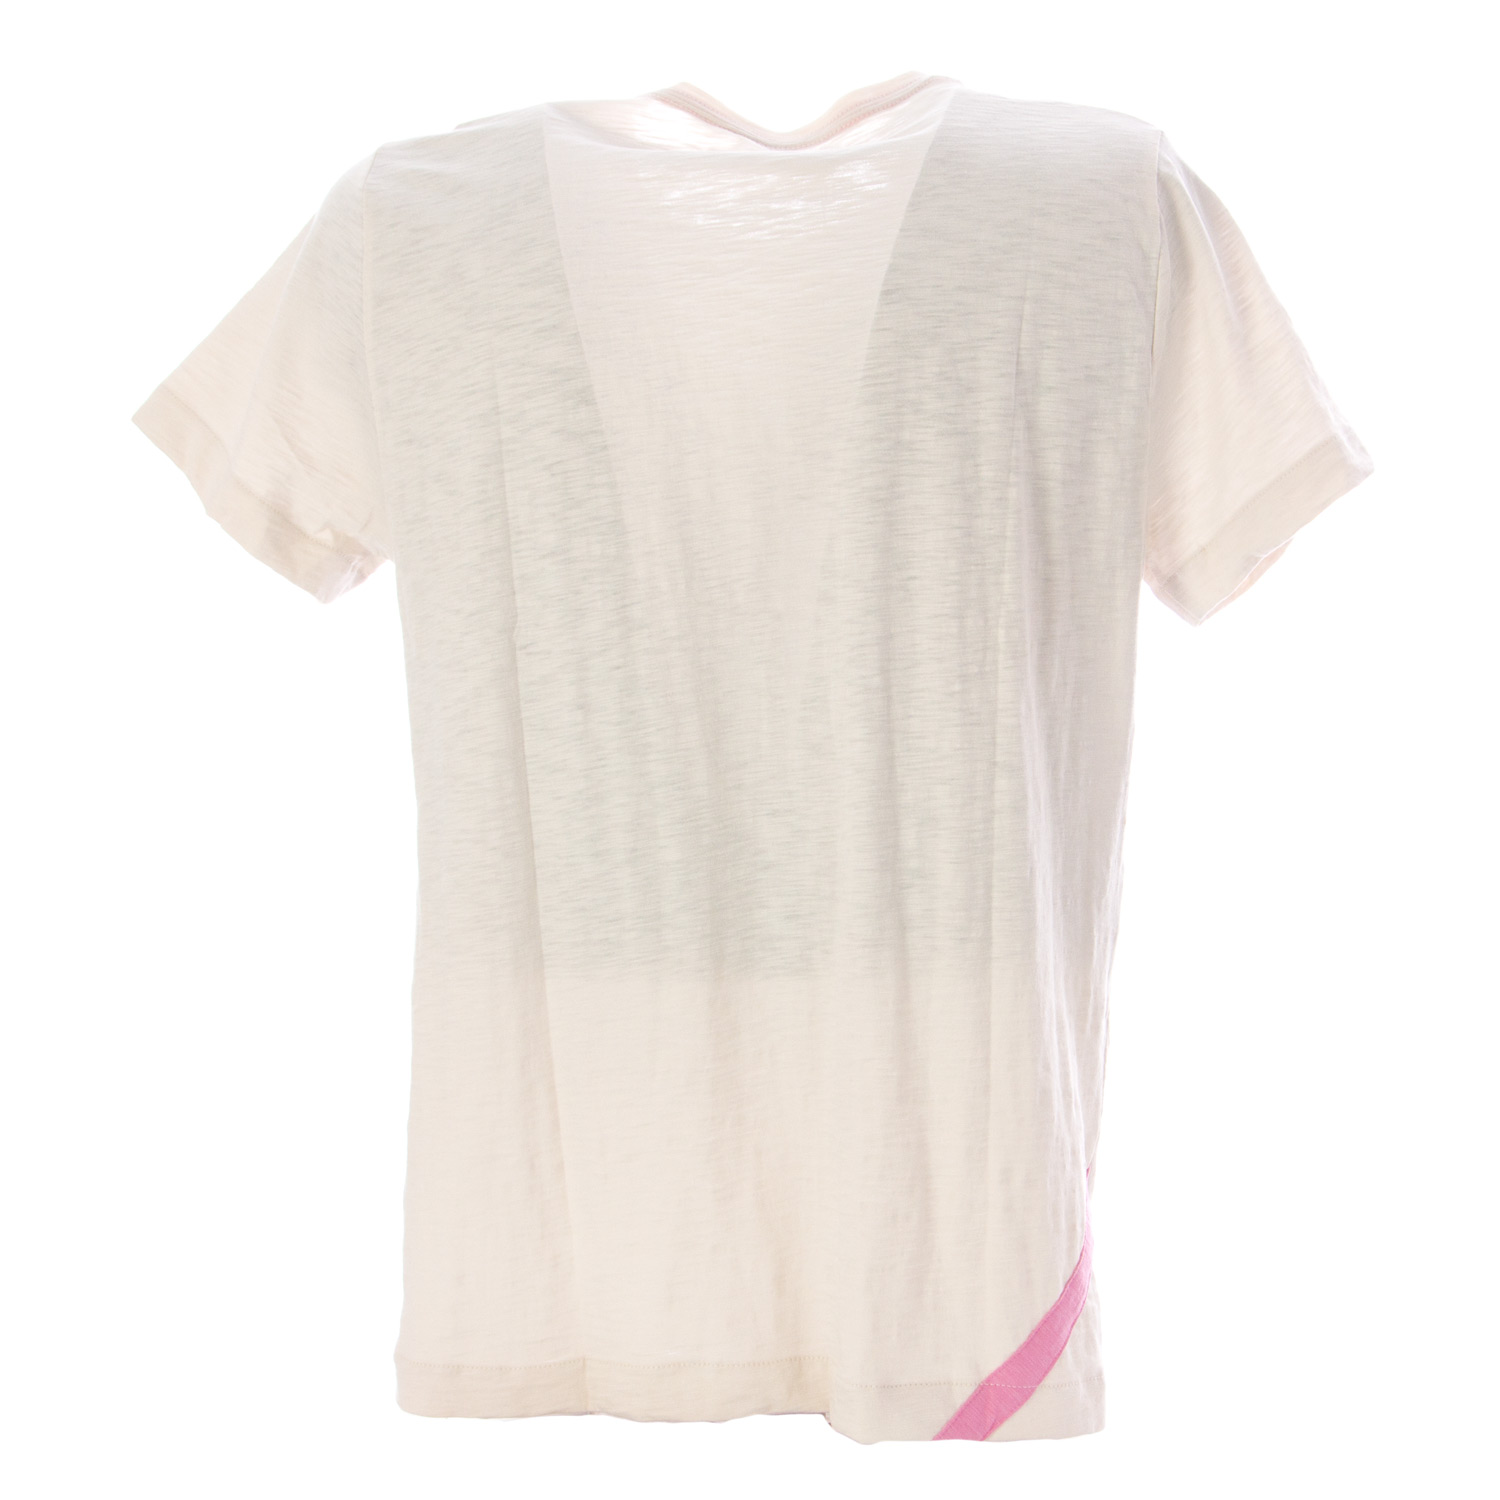 OLASUL Men's Bone Playa Short Sleeve T-Shirt $60 NEW | eBay